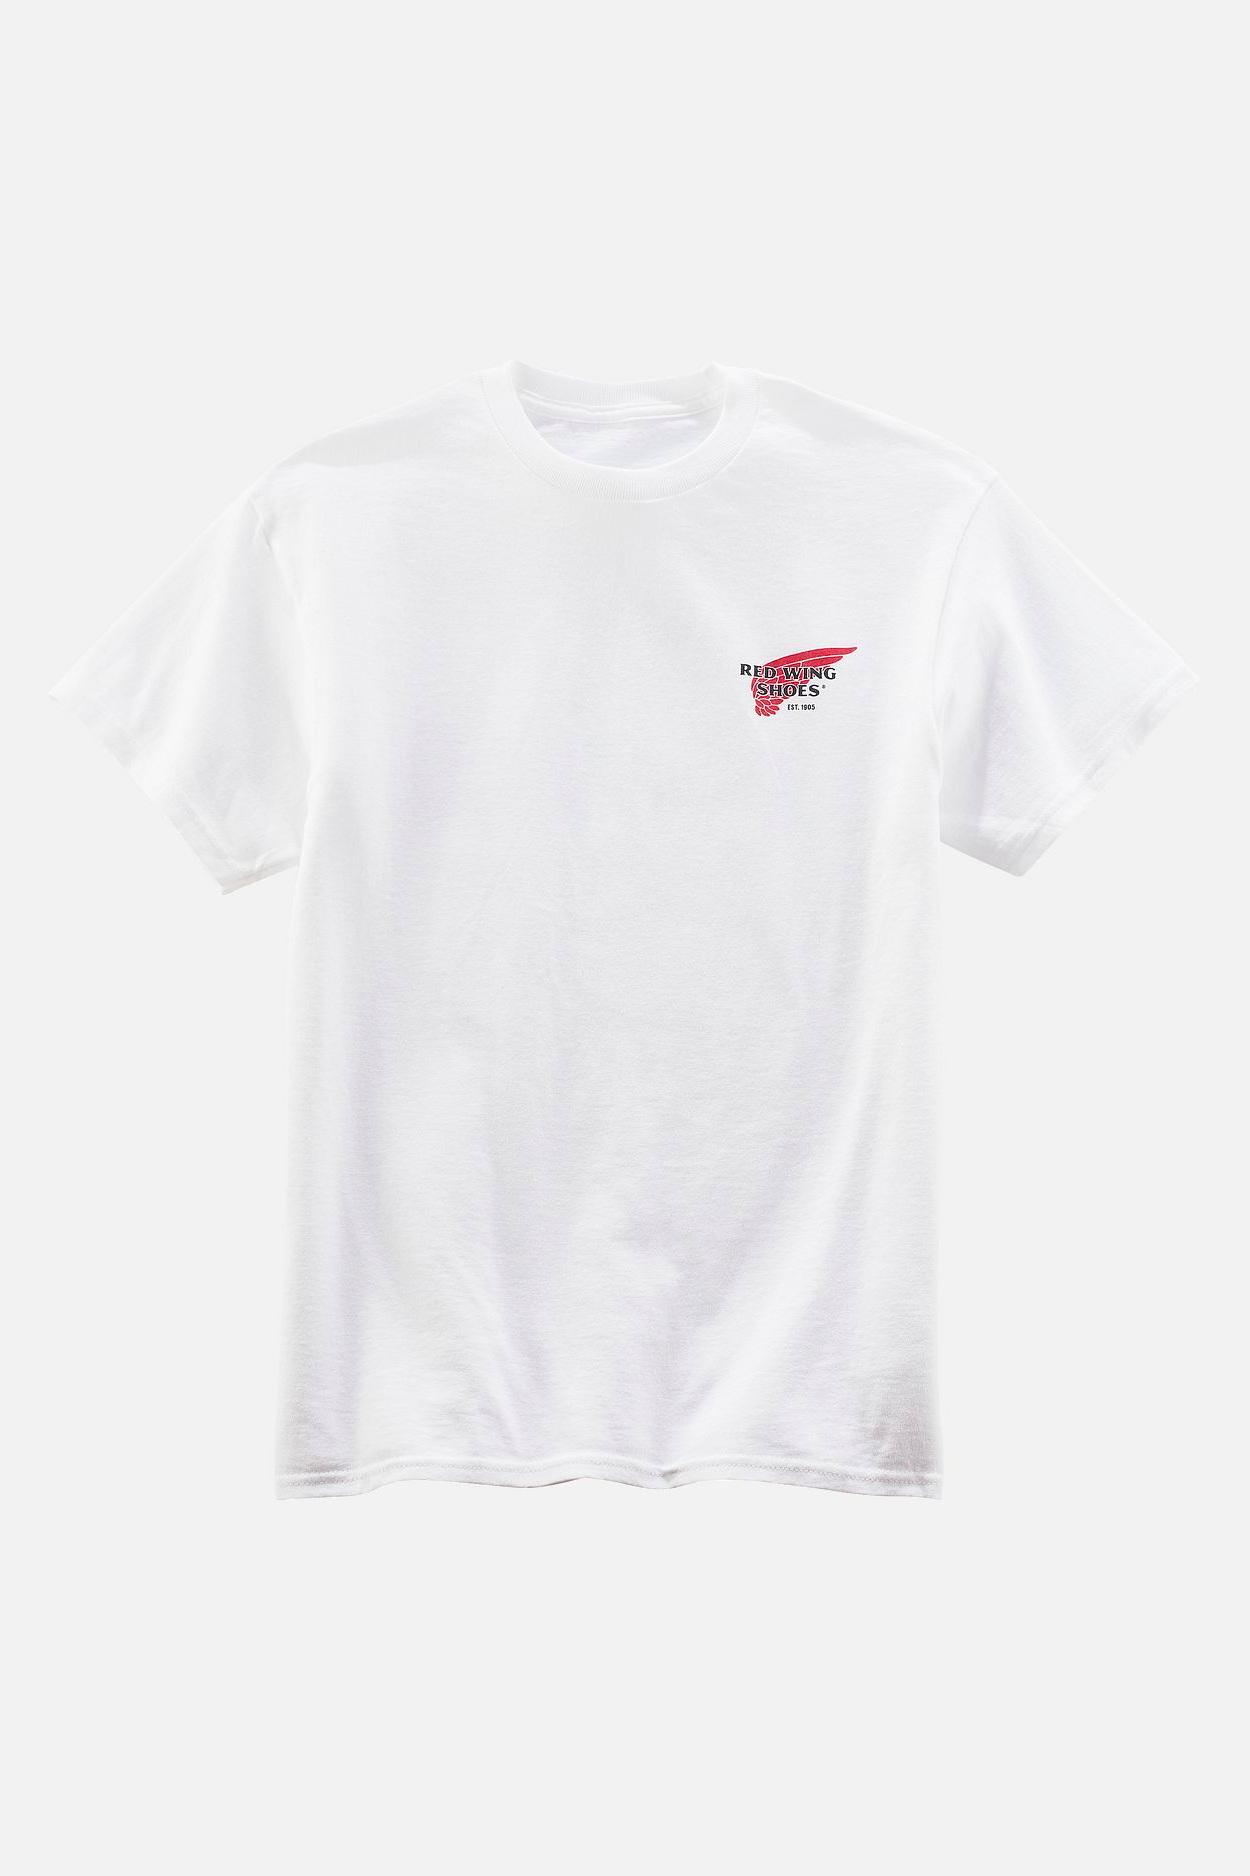 Men's Red Wing Heritage Logo T-Shirt in White